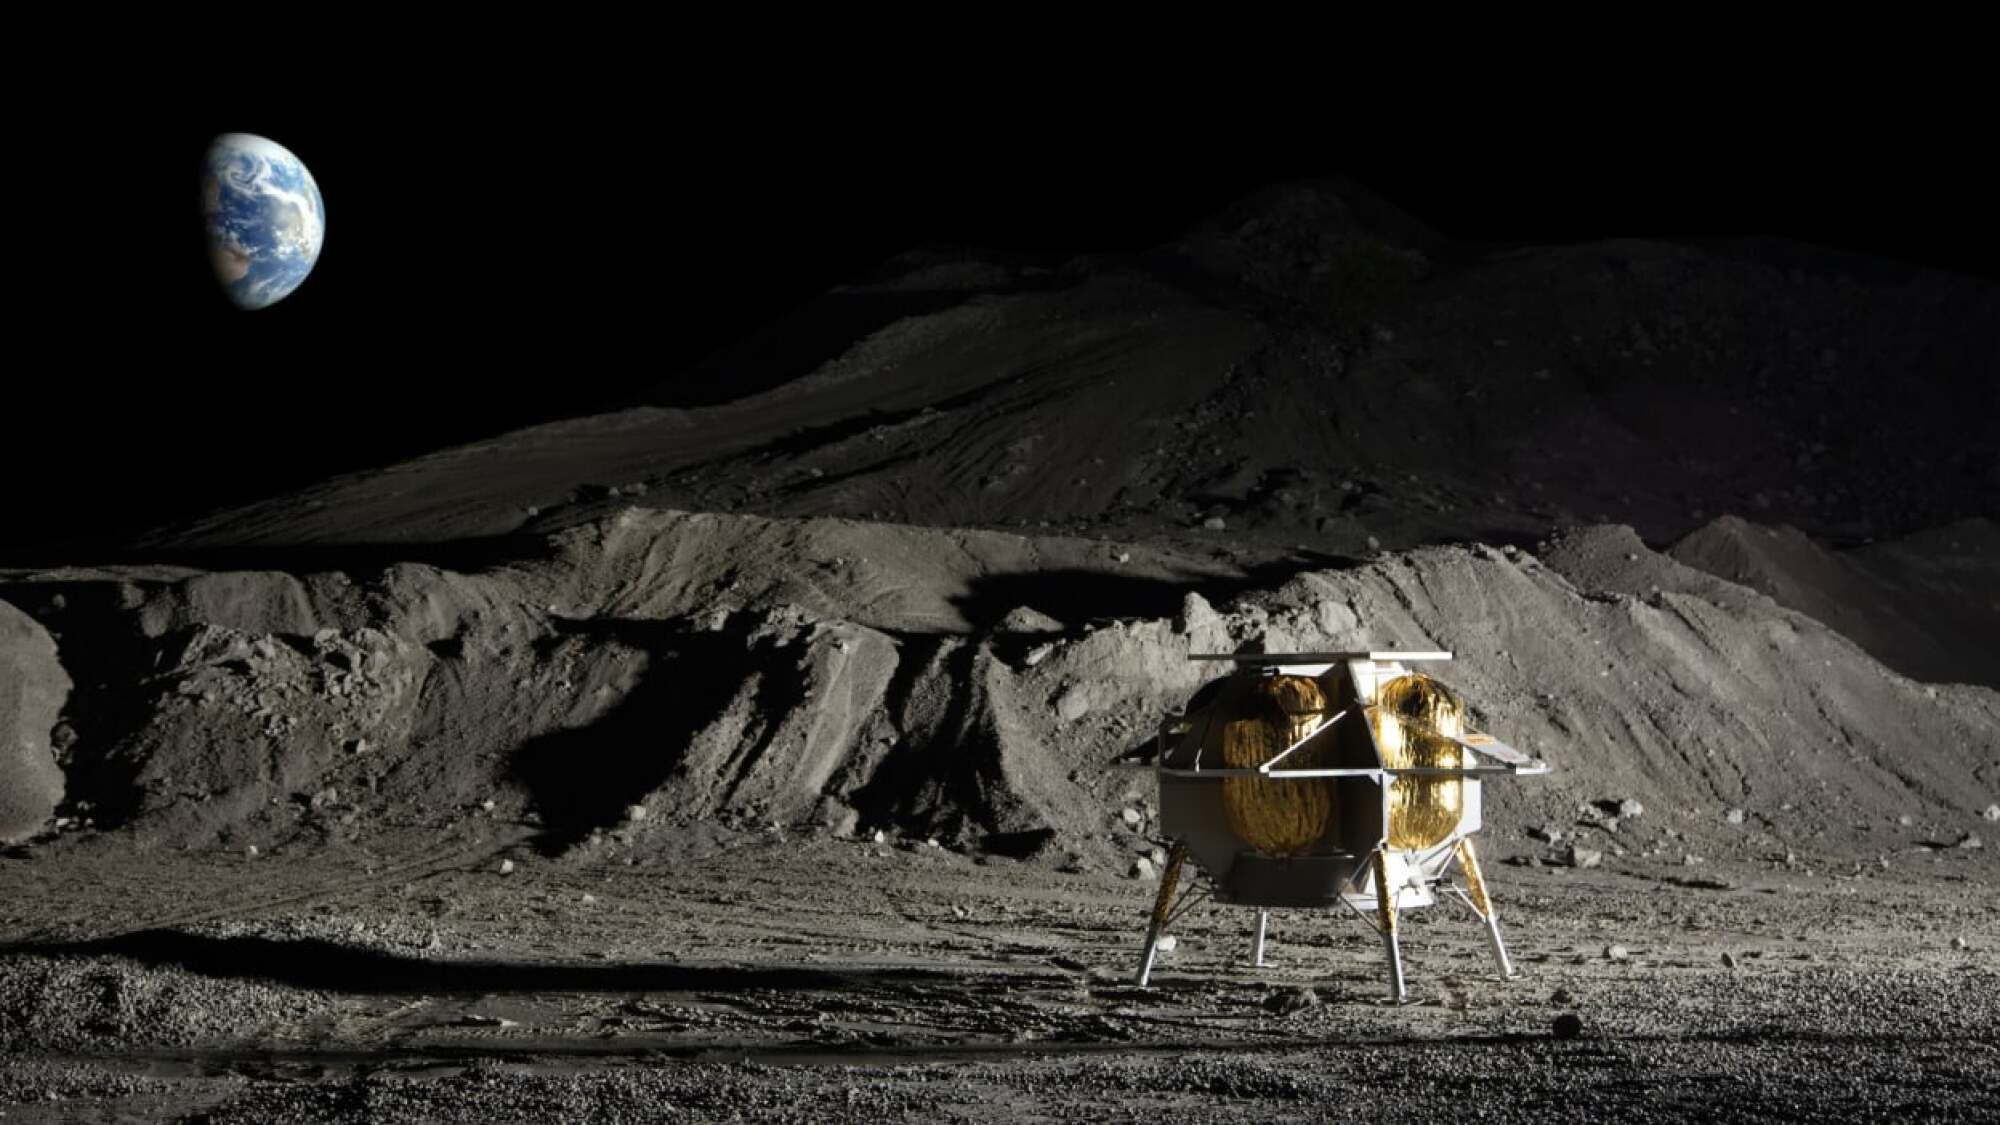 Lander sitting on the moon